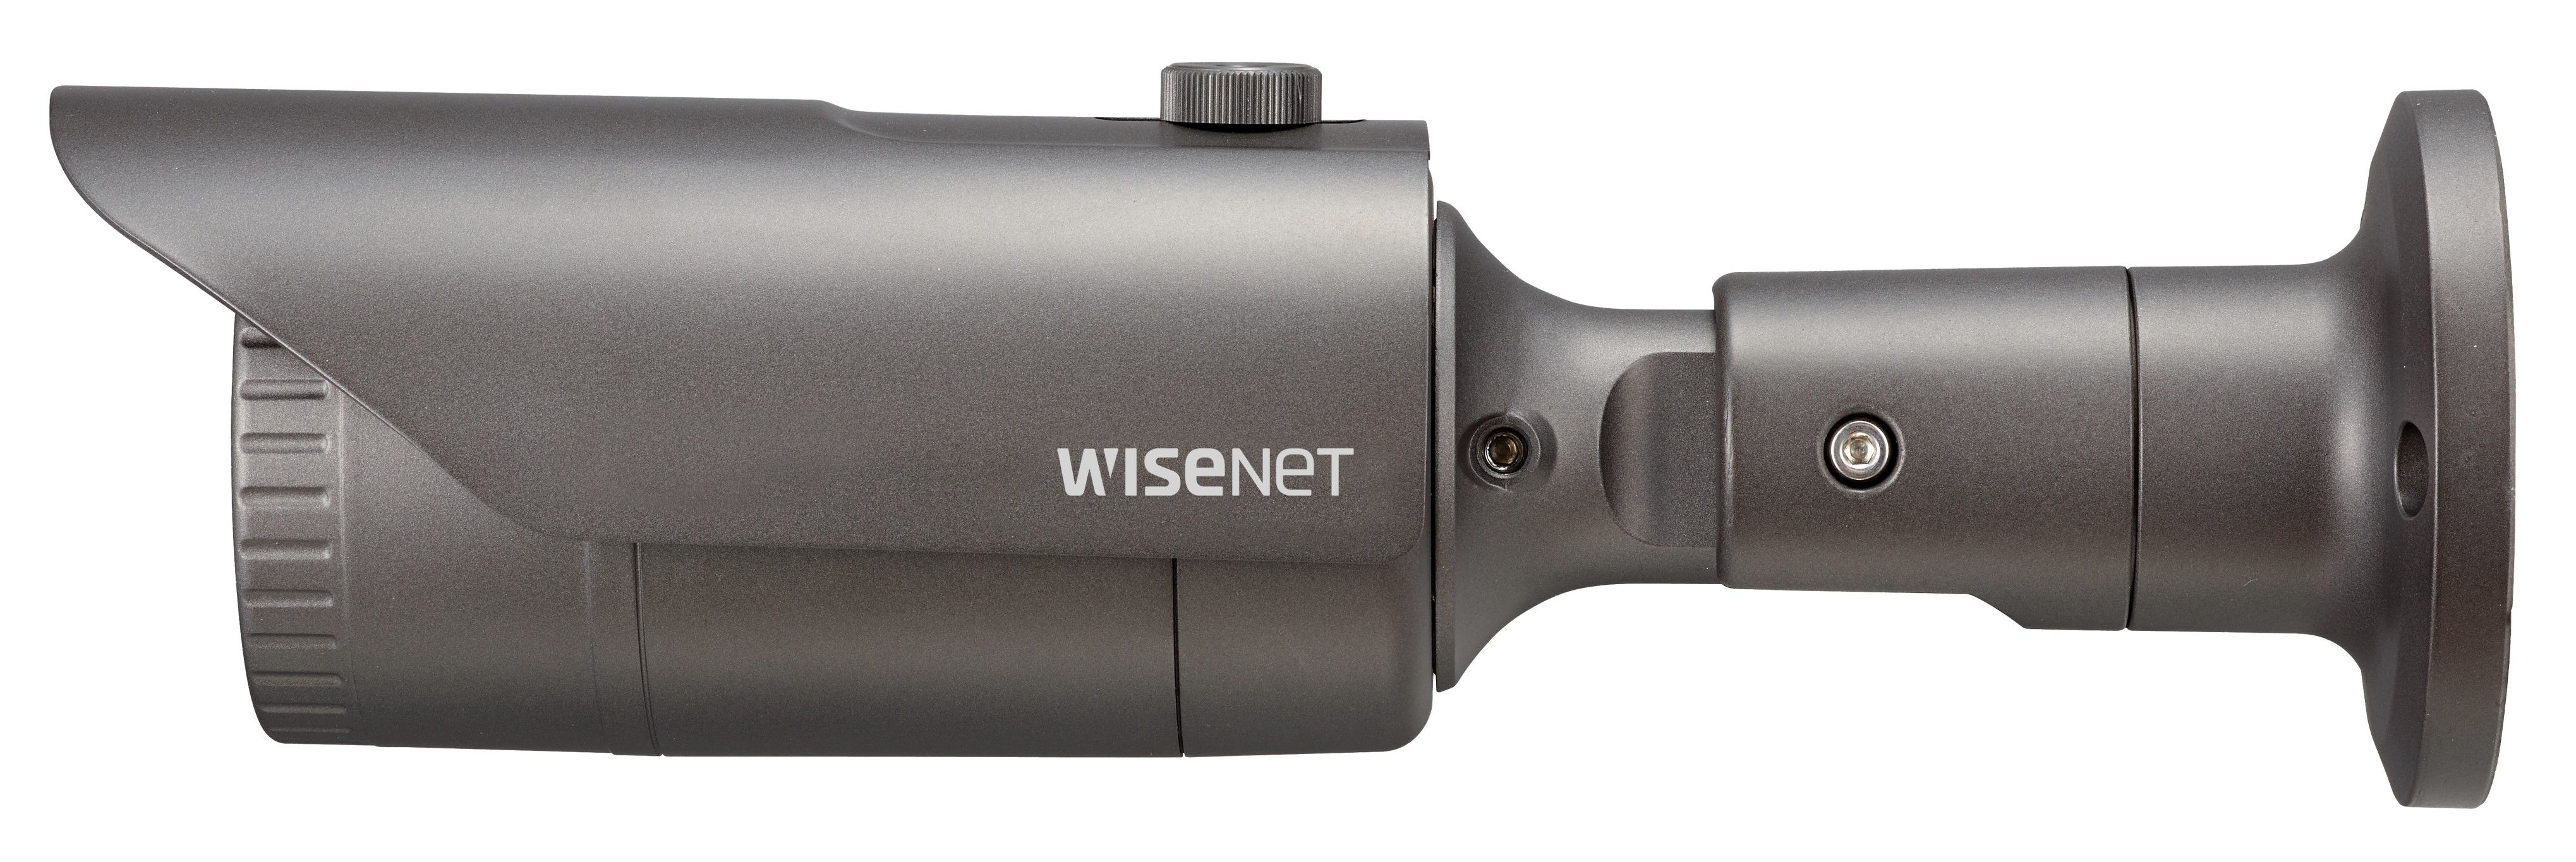 продаём Wisenet QNO-6022R в Украине - фото 4